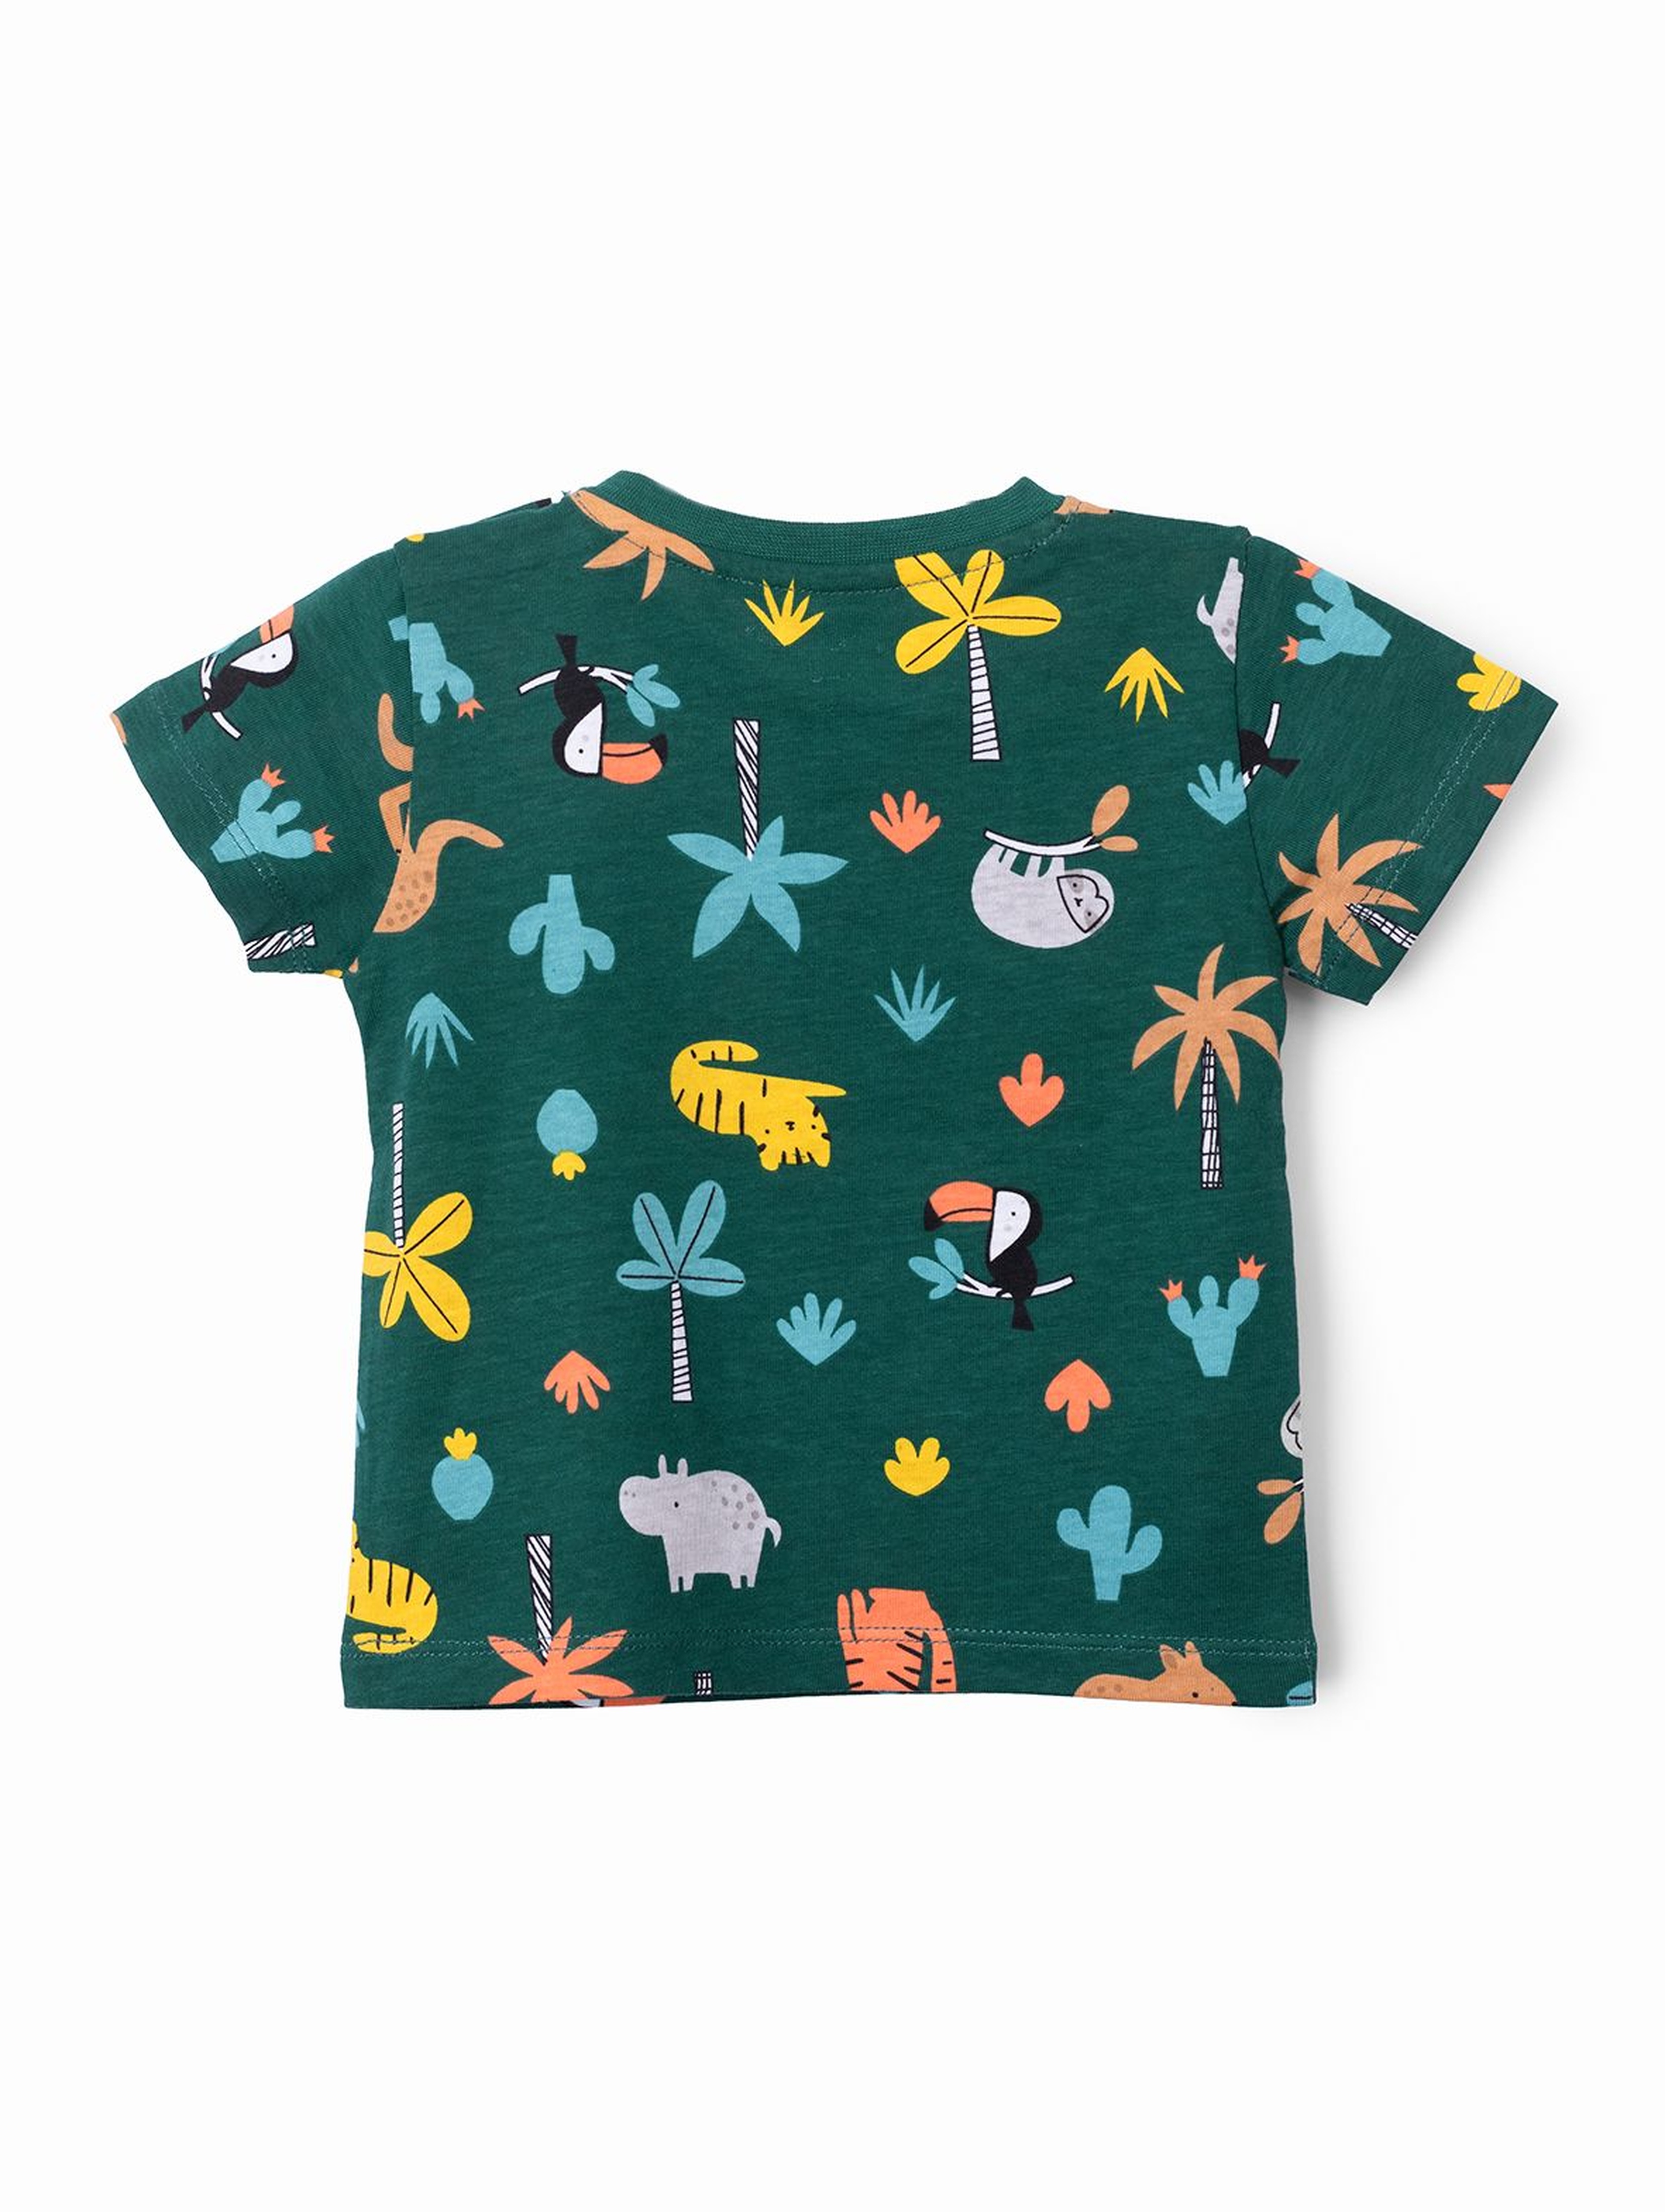 T-shirt niemowlęcy ciemnozielony z nadrukiem Safari